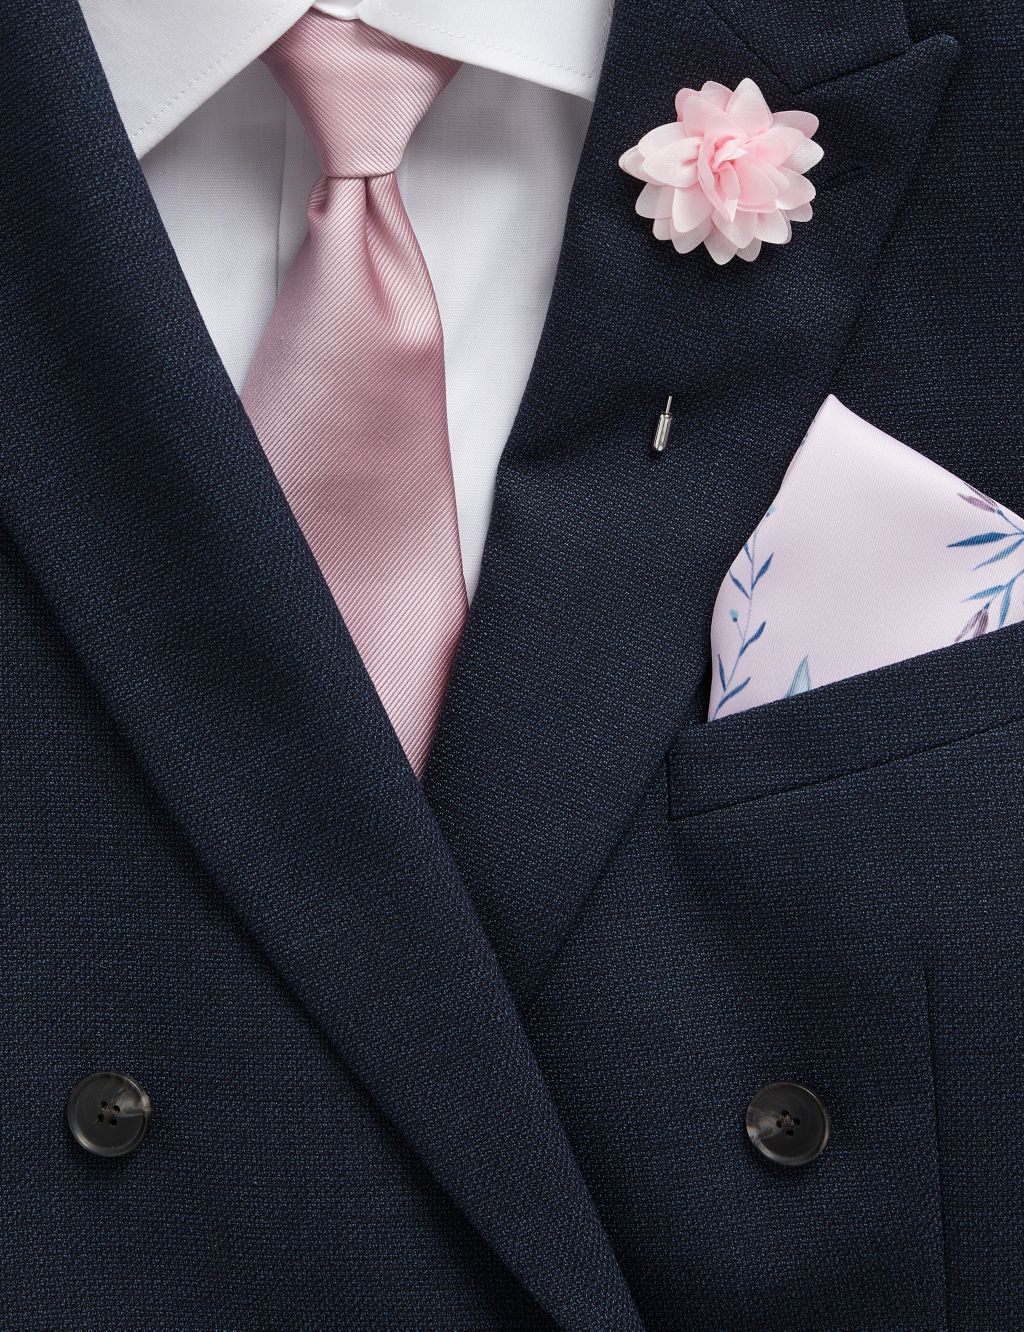 Floral Tie, Pocket Square & Pin Set image 1